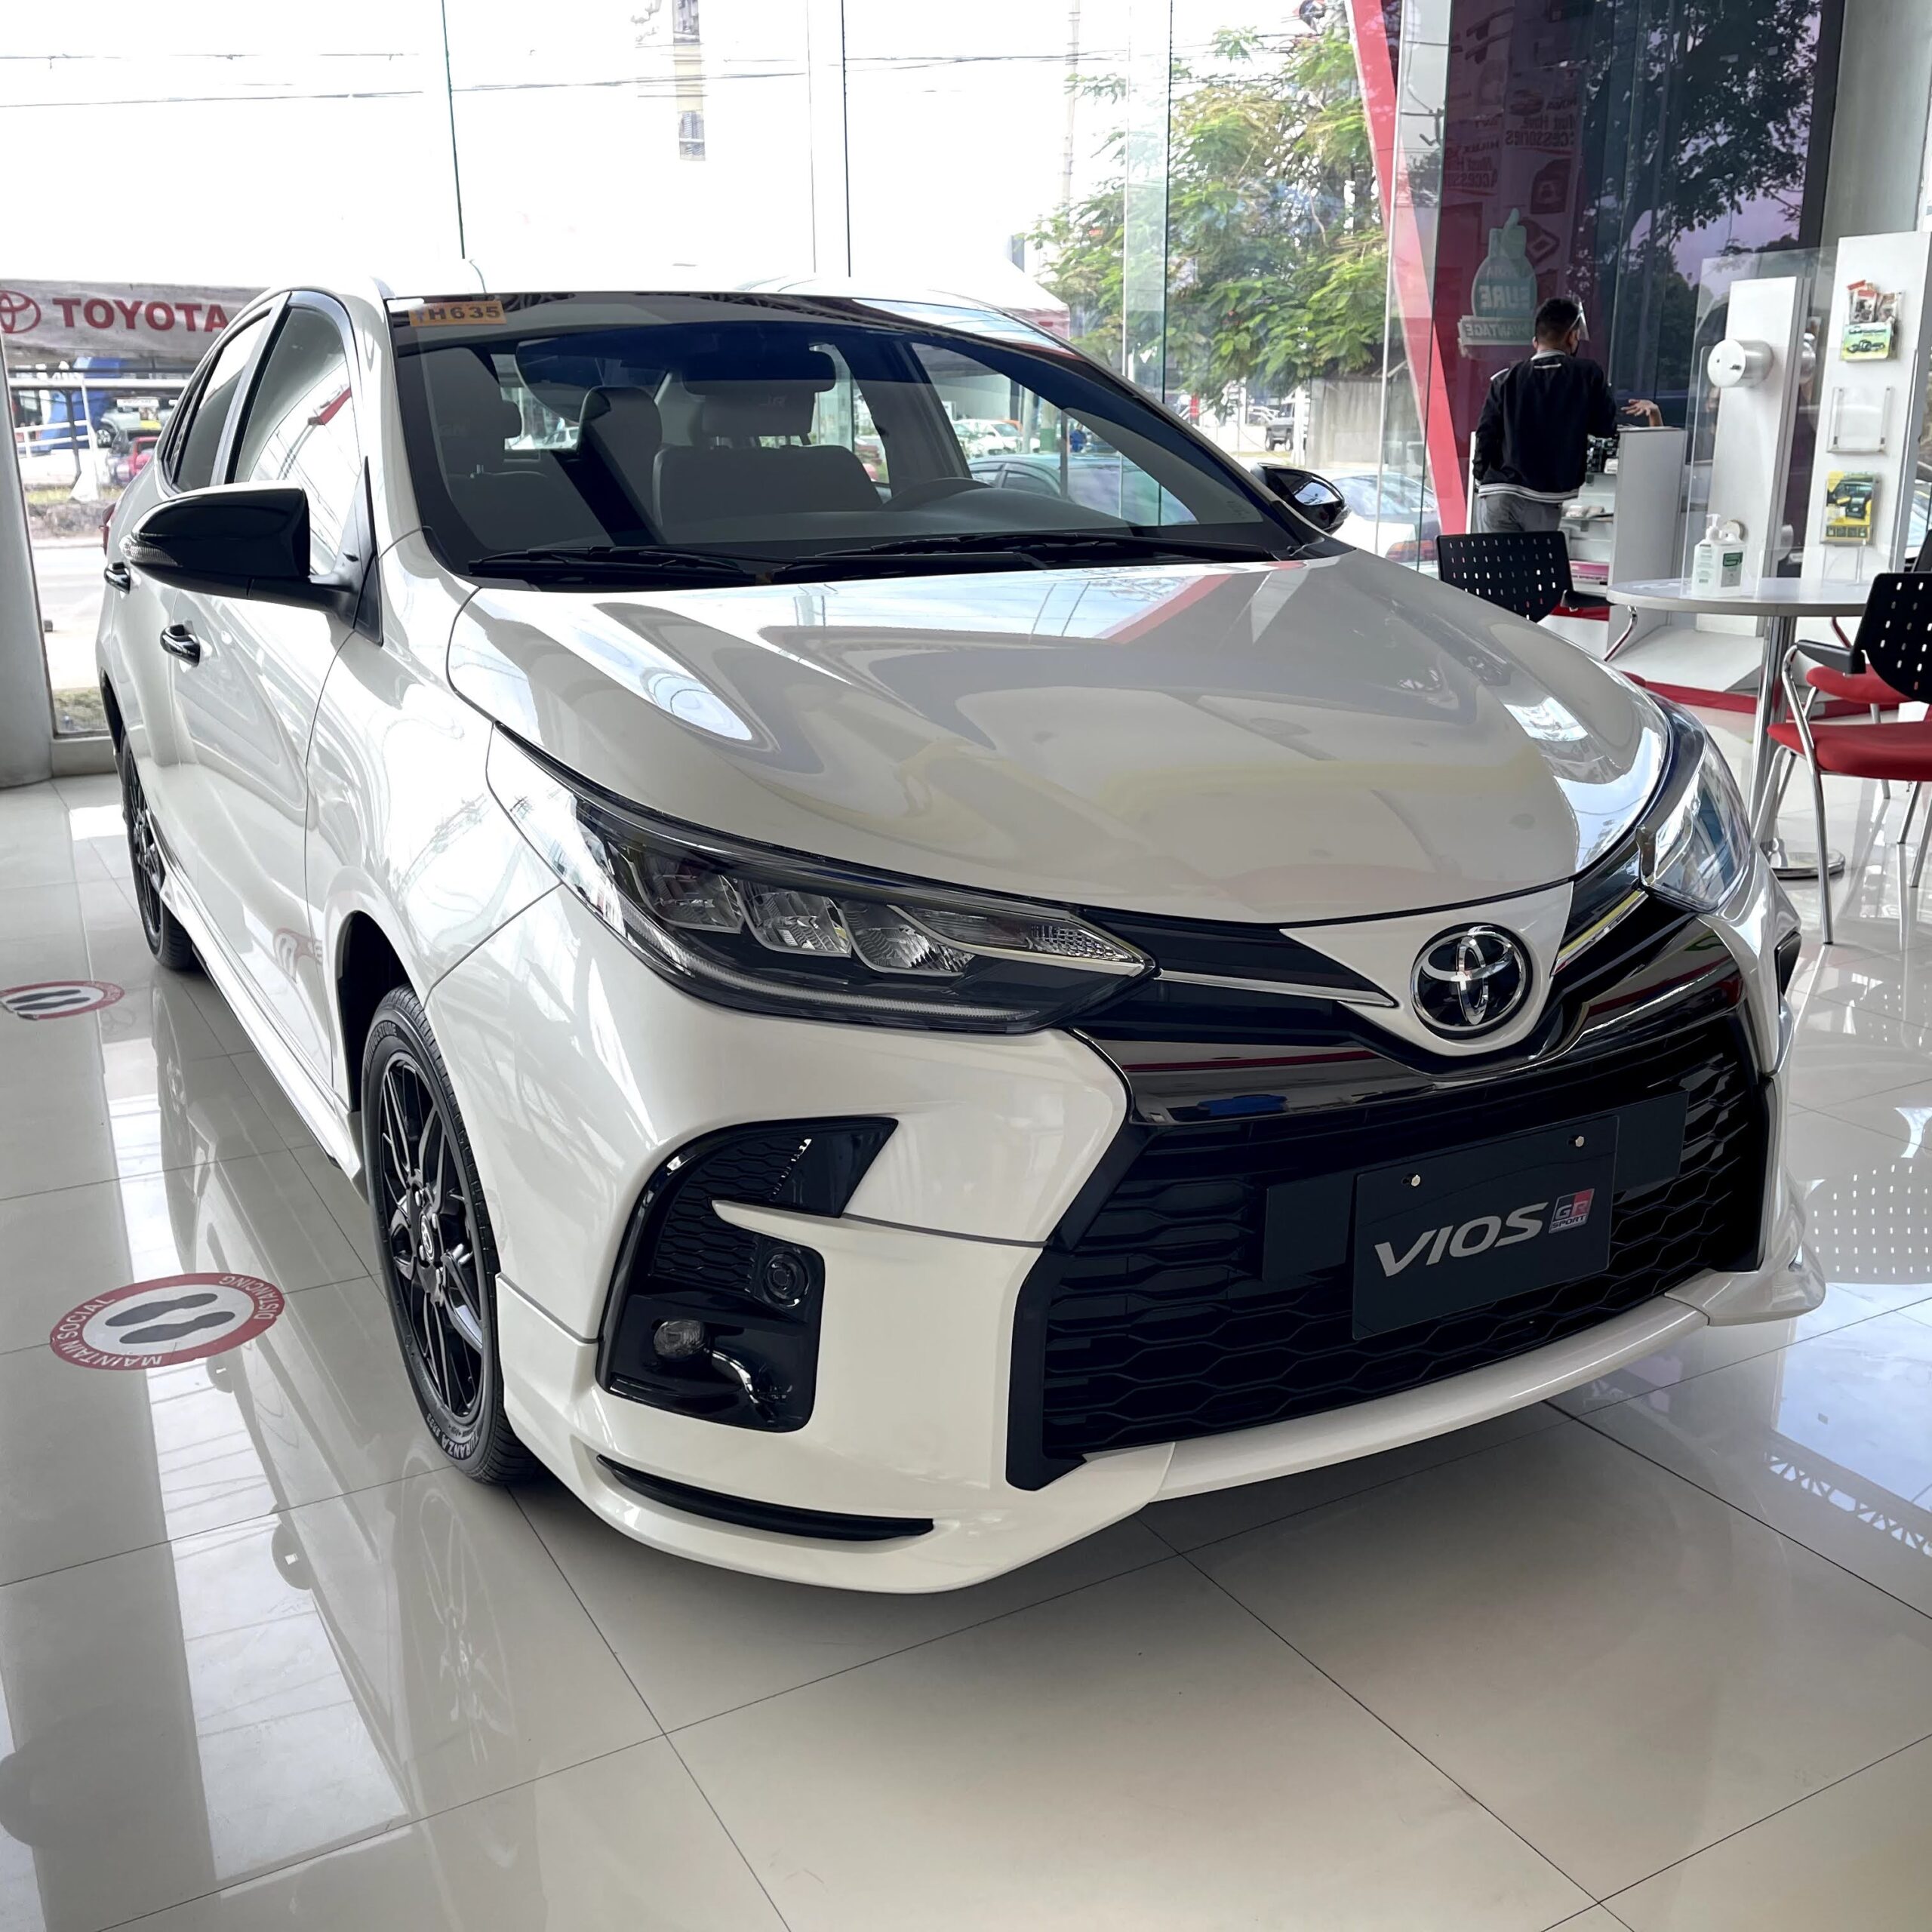 Toyota Vios 1.5 GRS - White Pearl